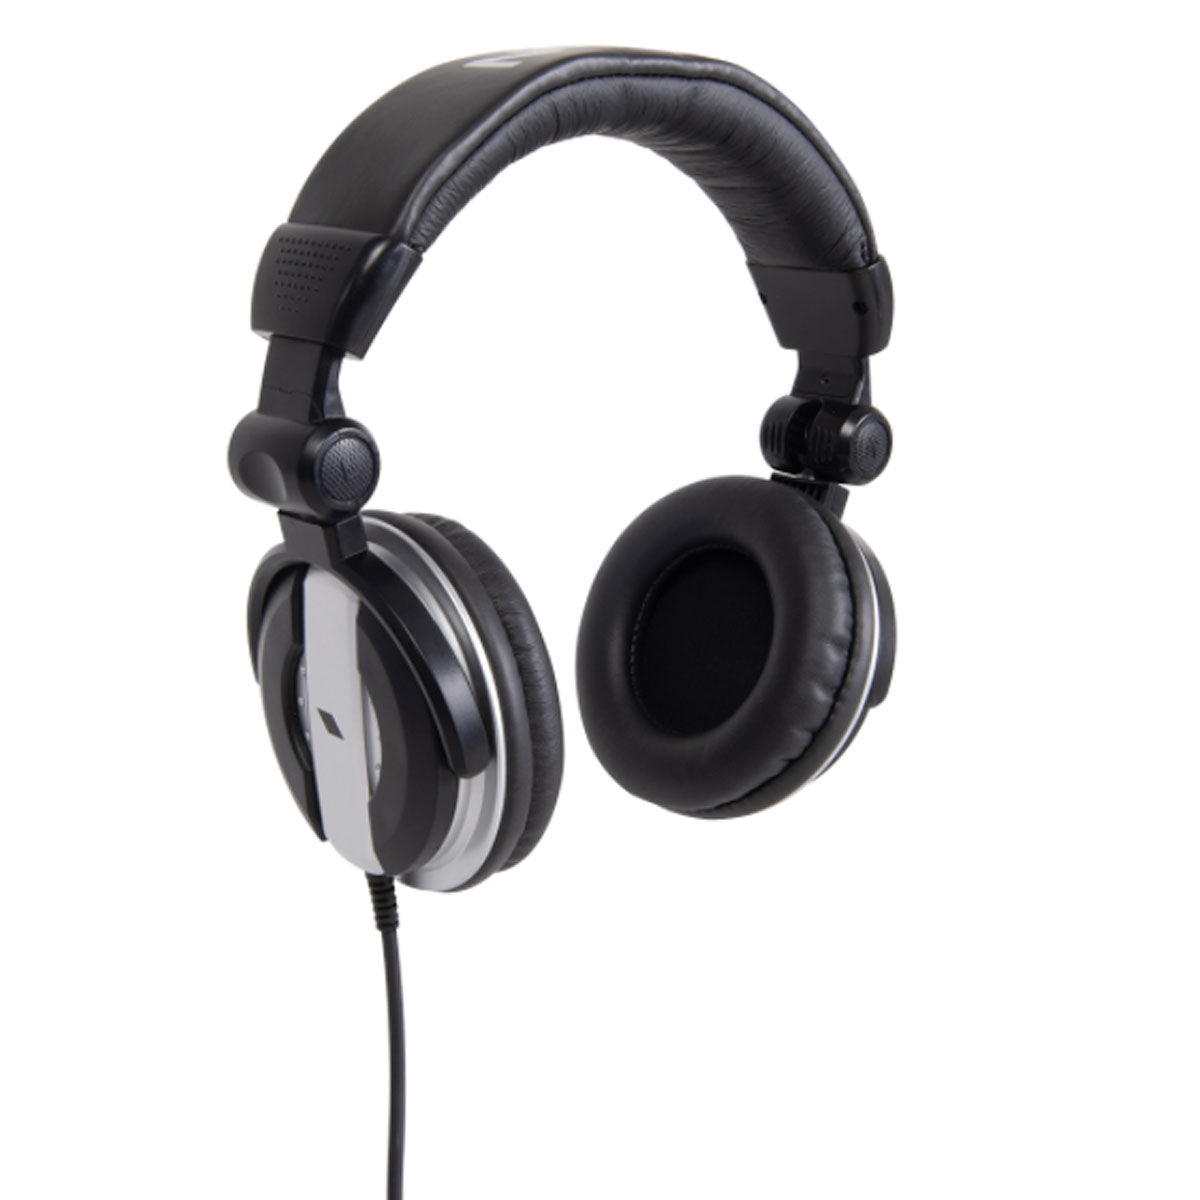 Eikon EHFJ700 DJ Headphones